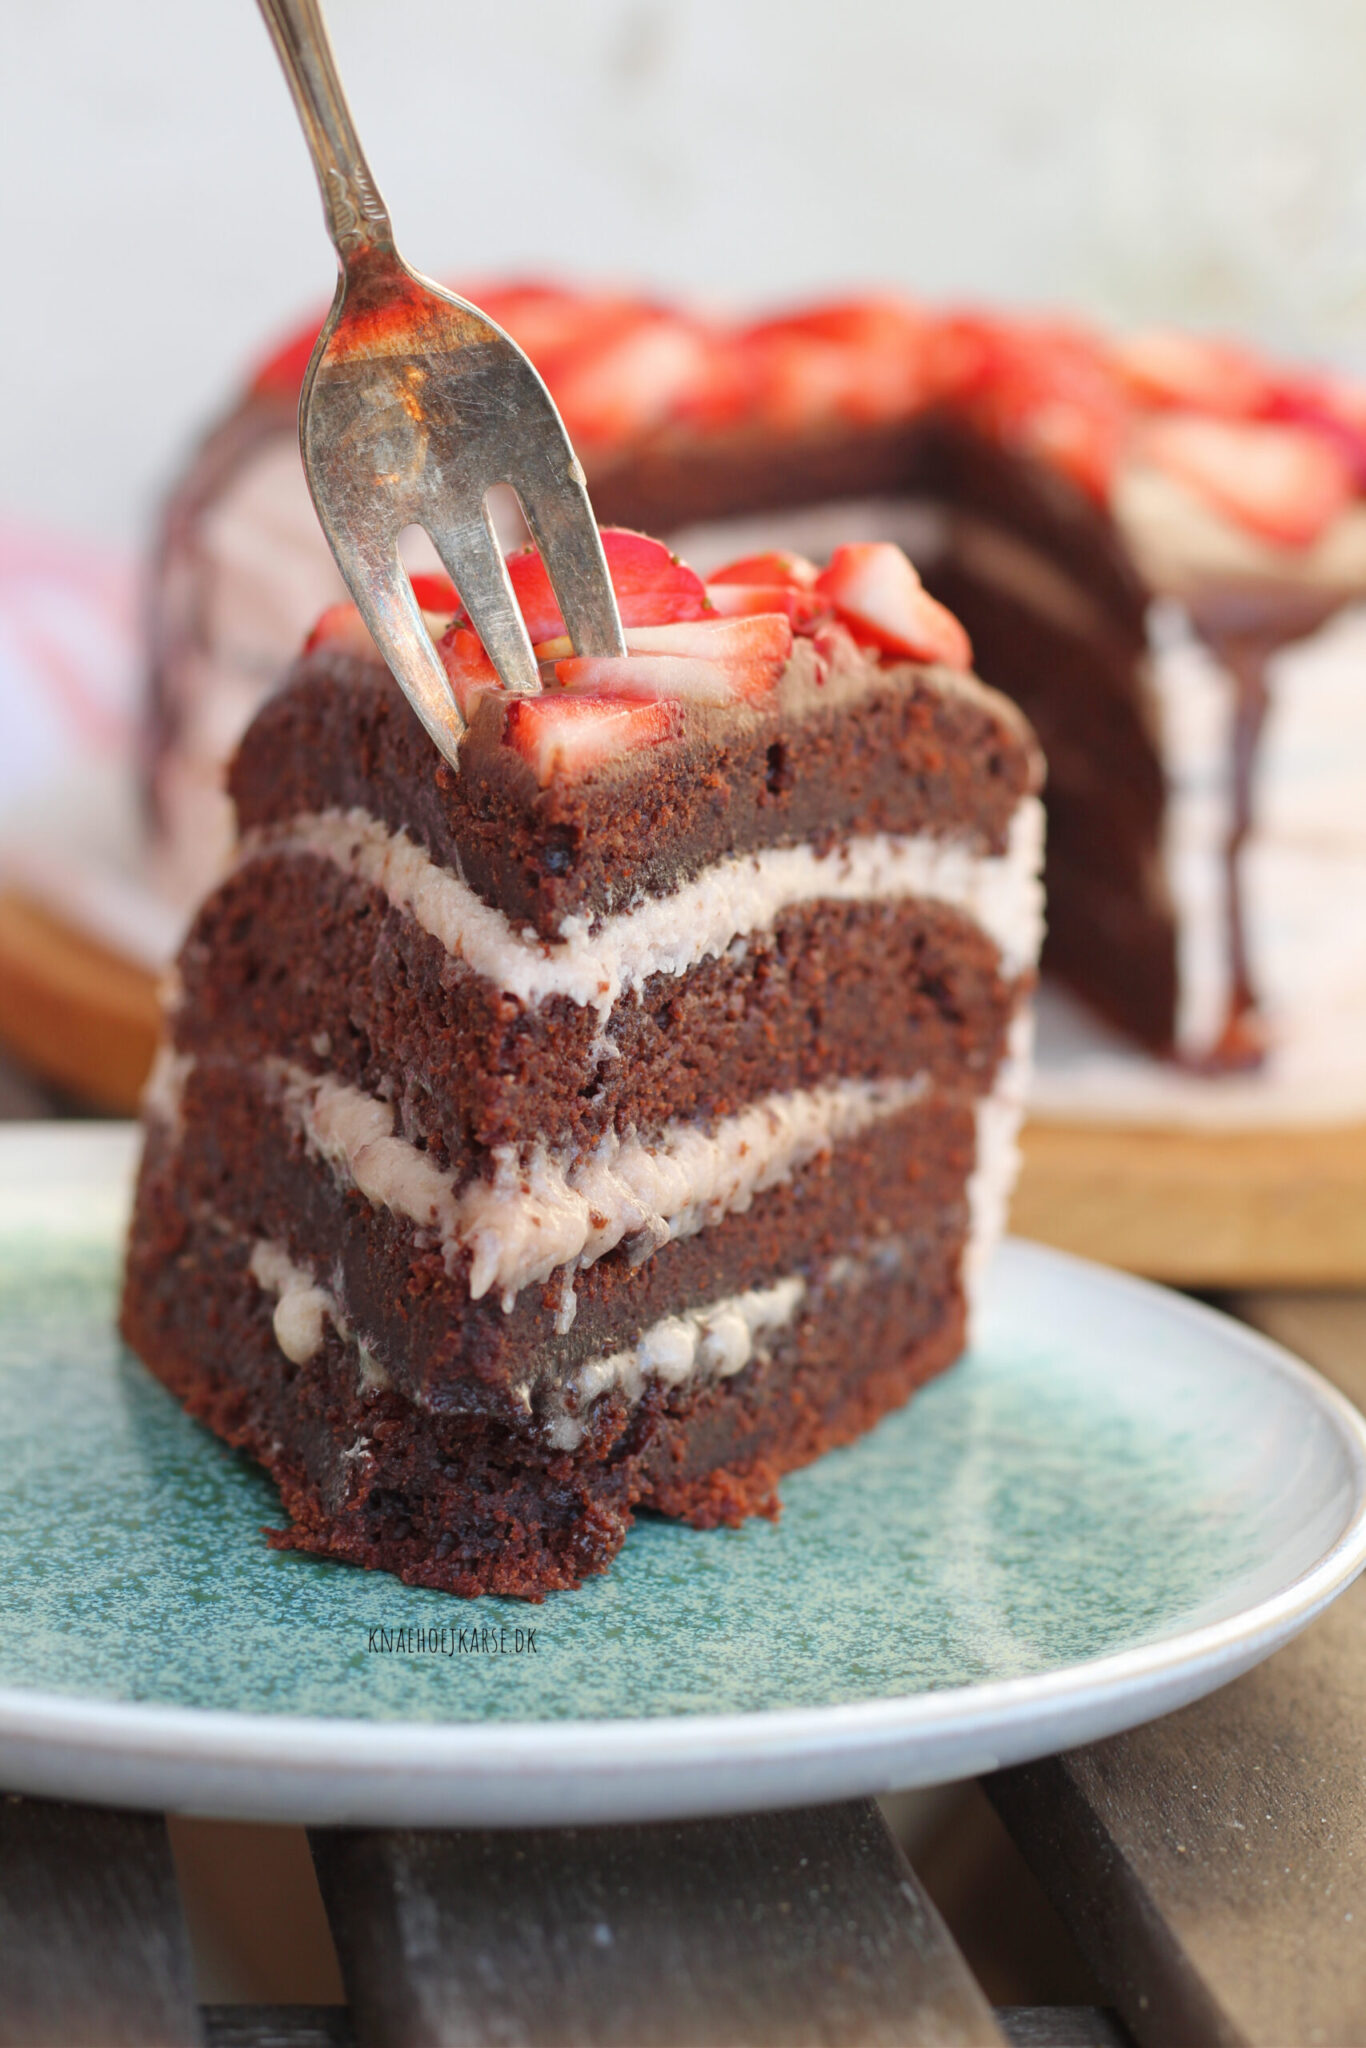 vegansk chokoladekage med jordbær smørcreme og chokoladeganache